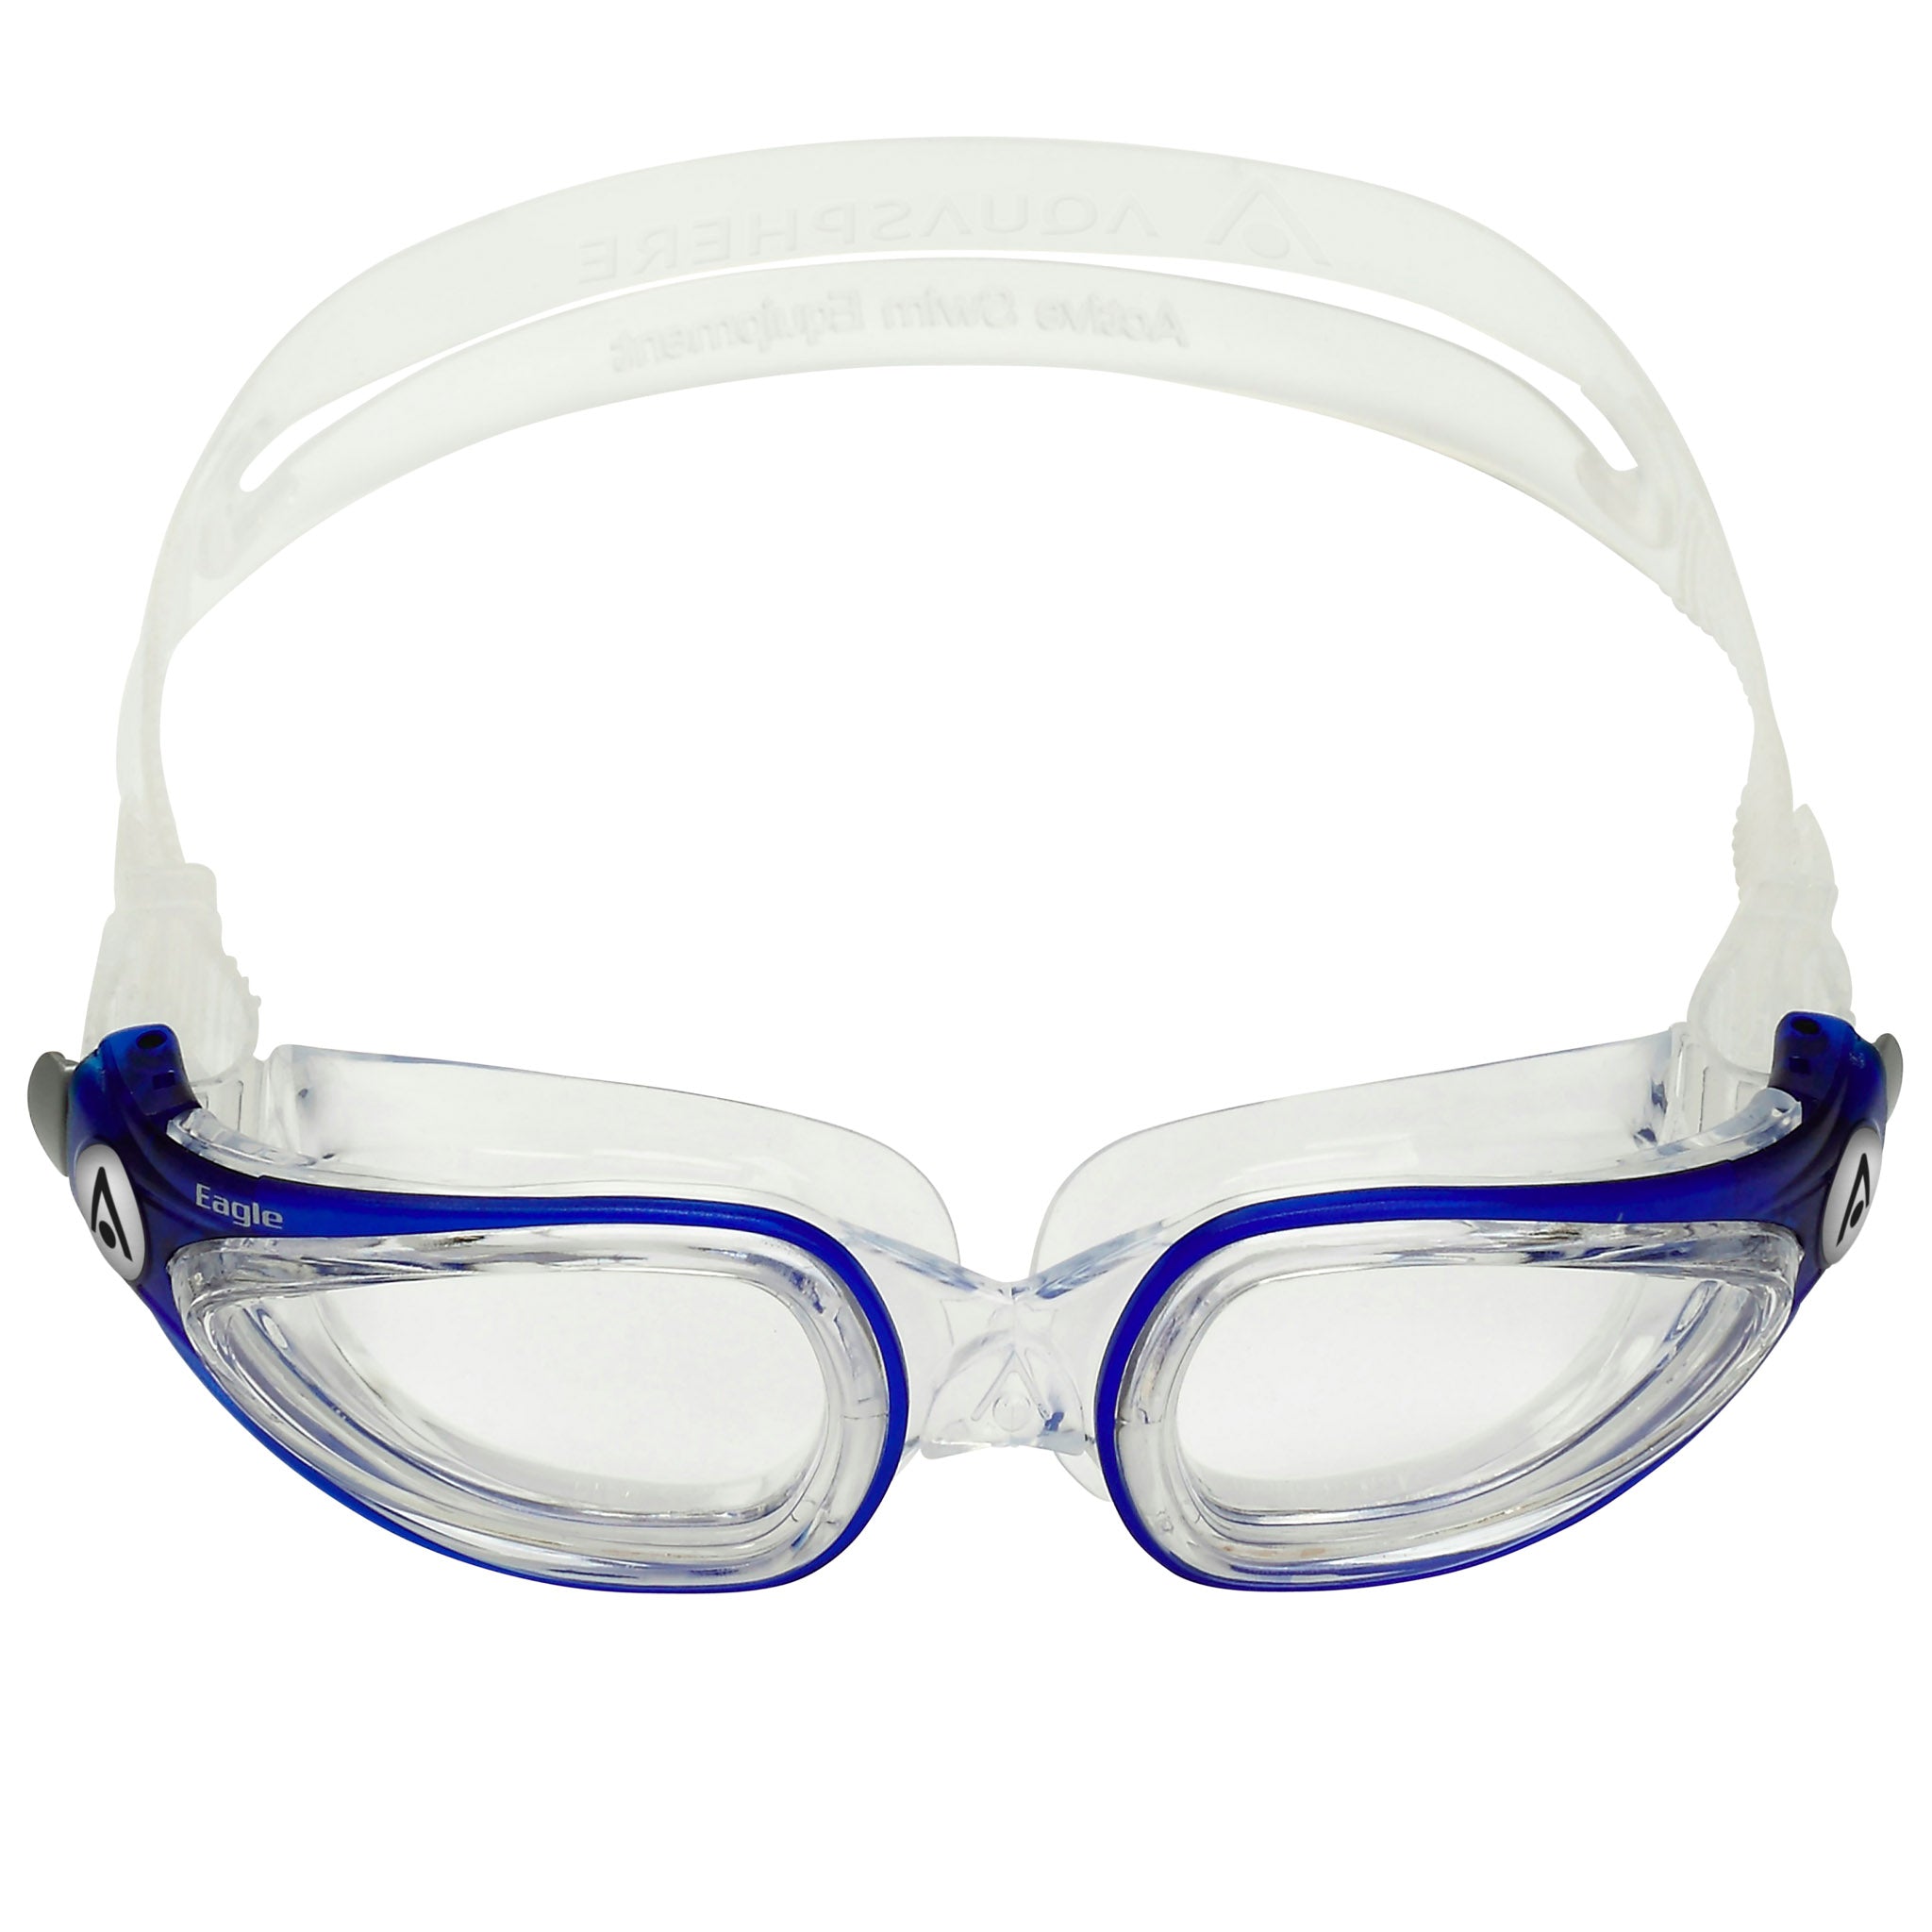 Aquasphere Eagle Swimming Goggles - Front